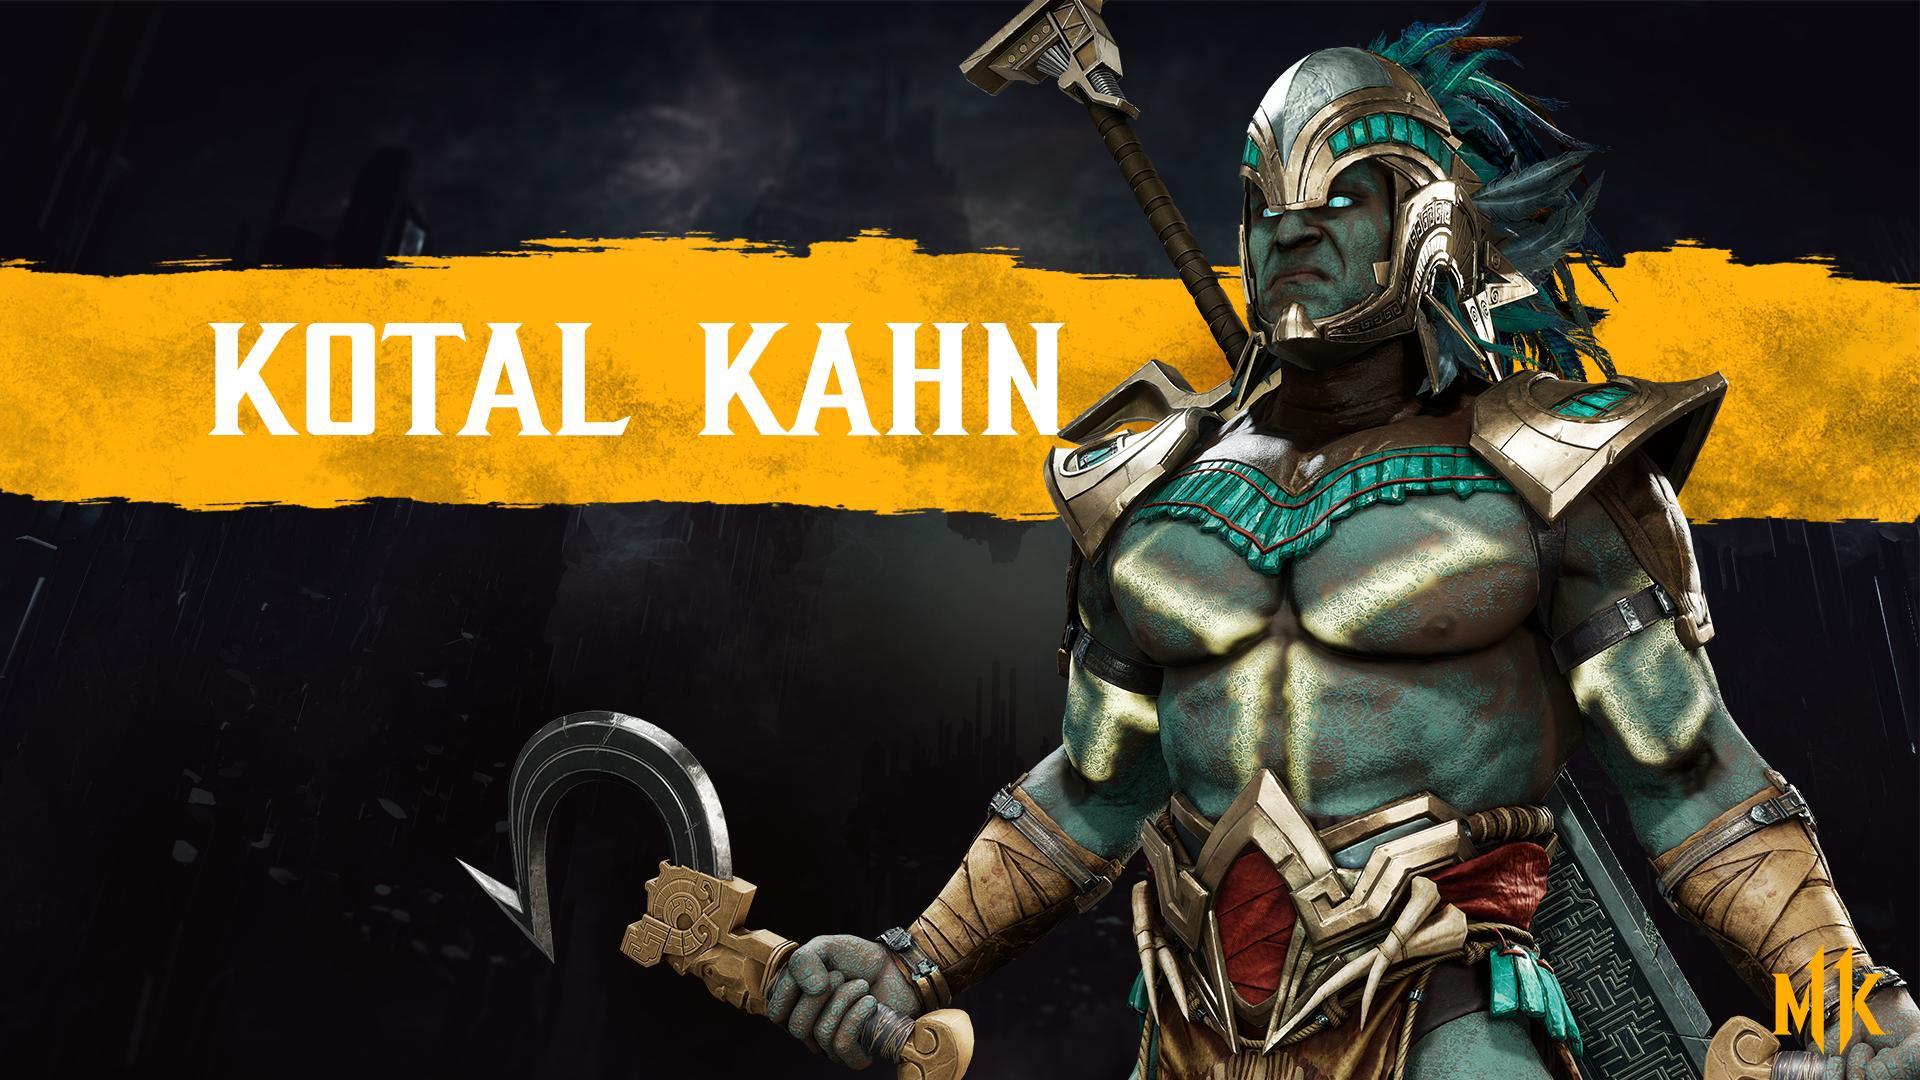 Wallpaper of Kotal Kahn, Mortal Kombat Video Game